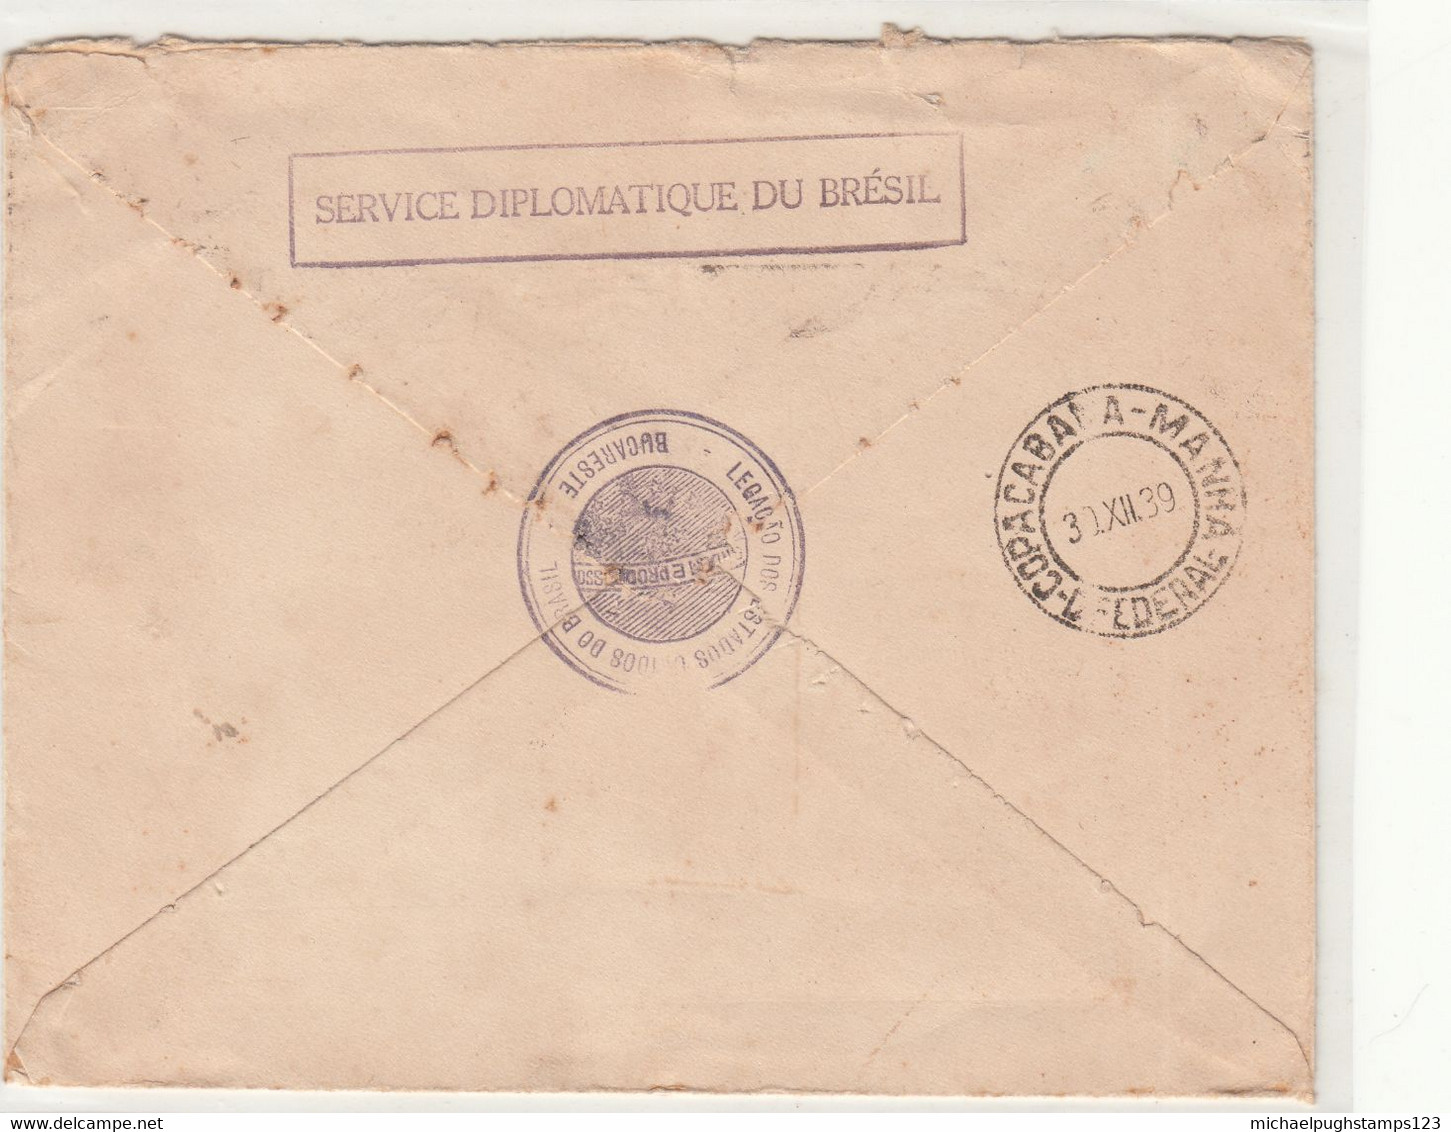 Romania / Diplomatic Mail / Brazil - Service